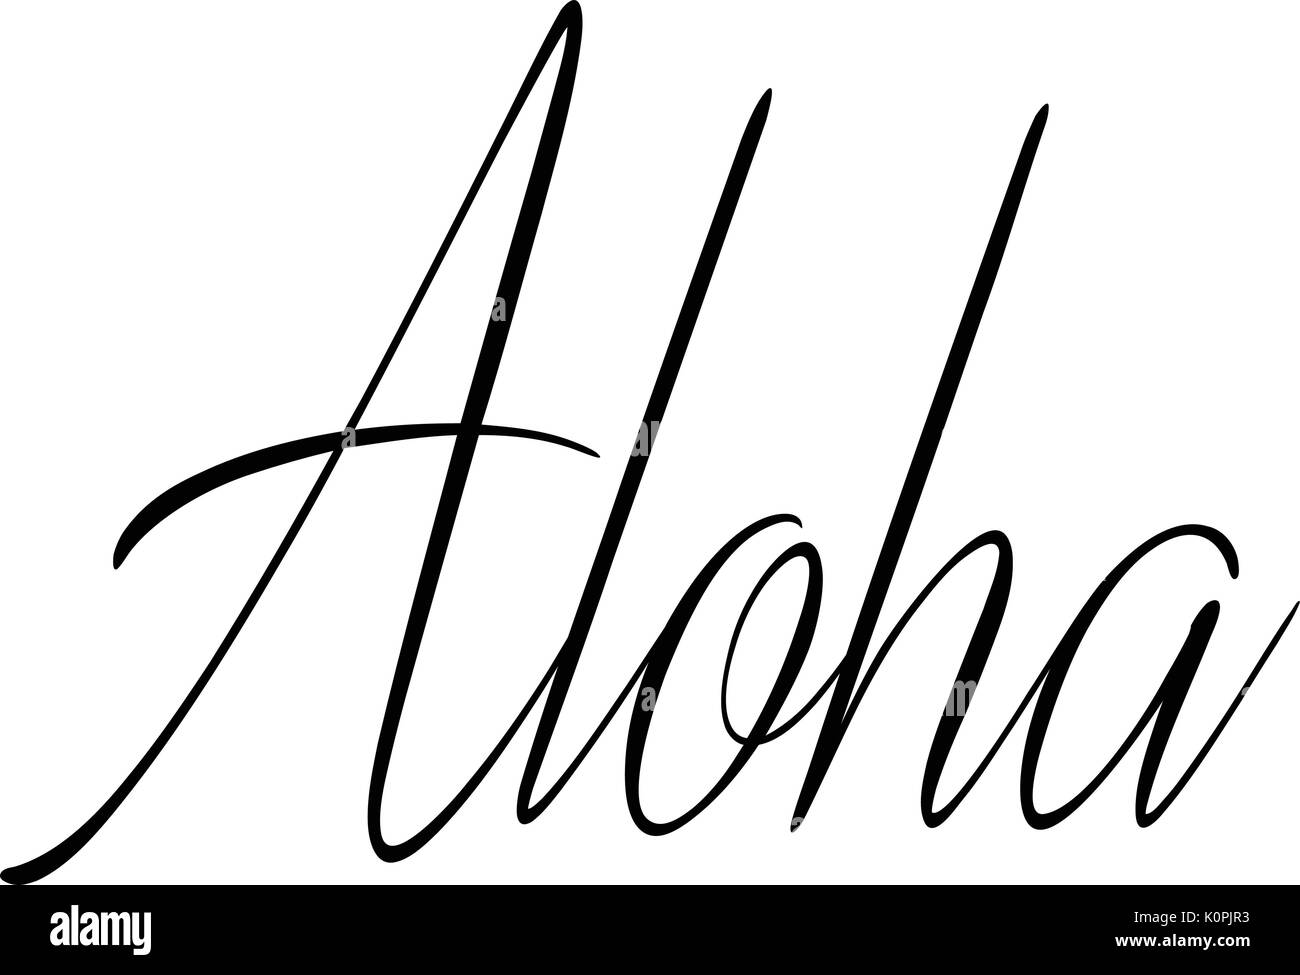 Aloha text sign illustration on white background Stock Vector